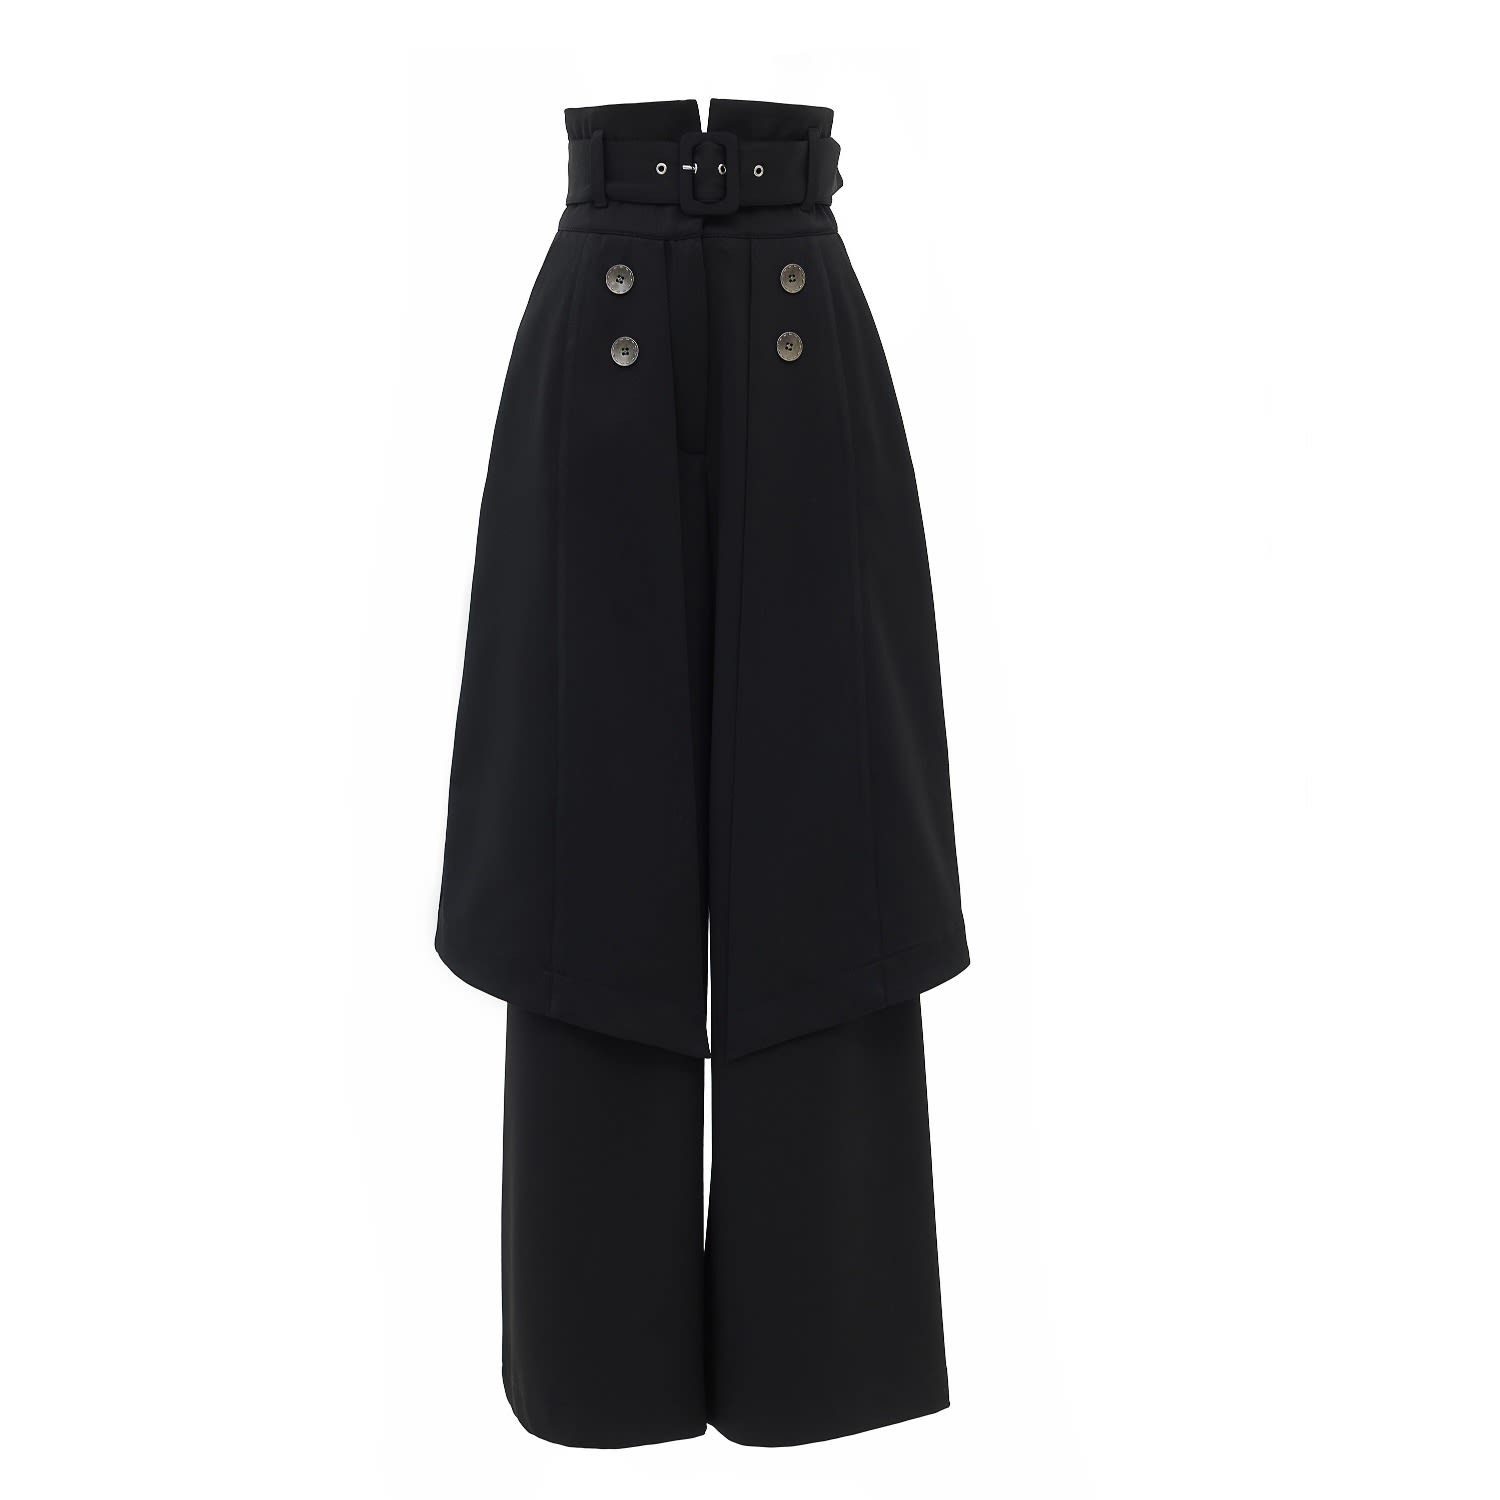 Buy KPC Skin Women's Ruffel Pants Split High Waist Maxi Long Crape Ruffle  Plazzo|Overlay Pants Skirt for Girls [ 28 to 40 Waist Size} at Amazon.in